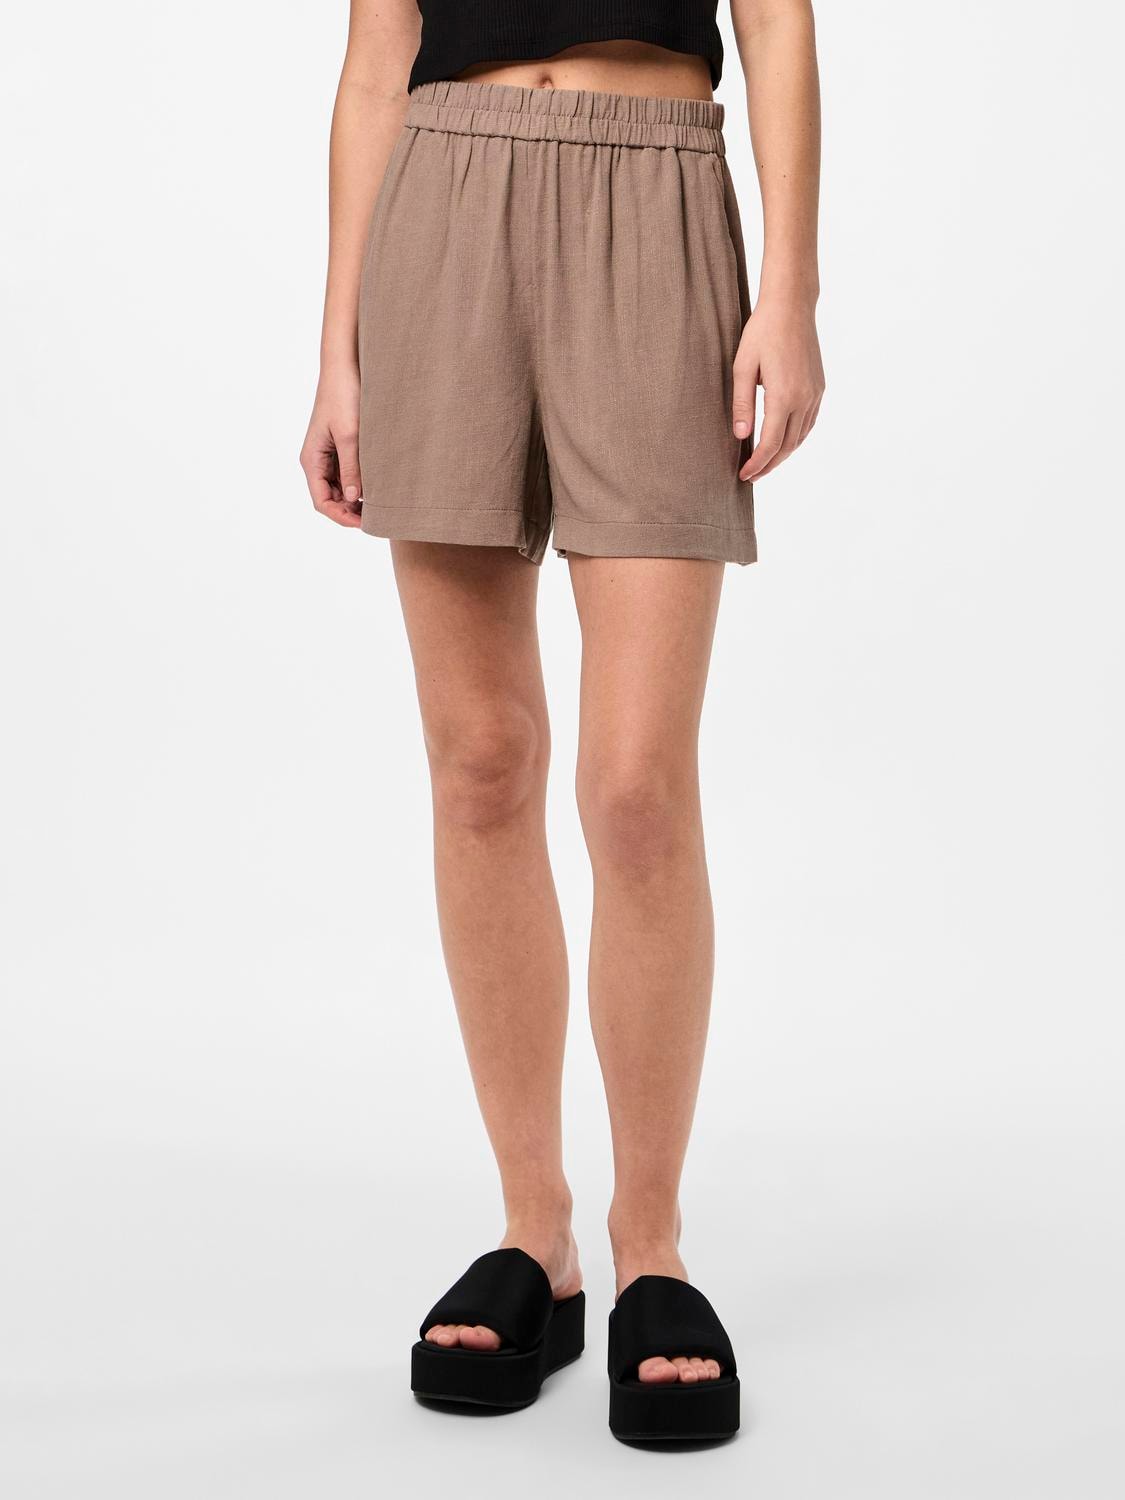 Vinsty linen shorts